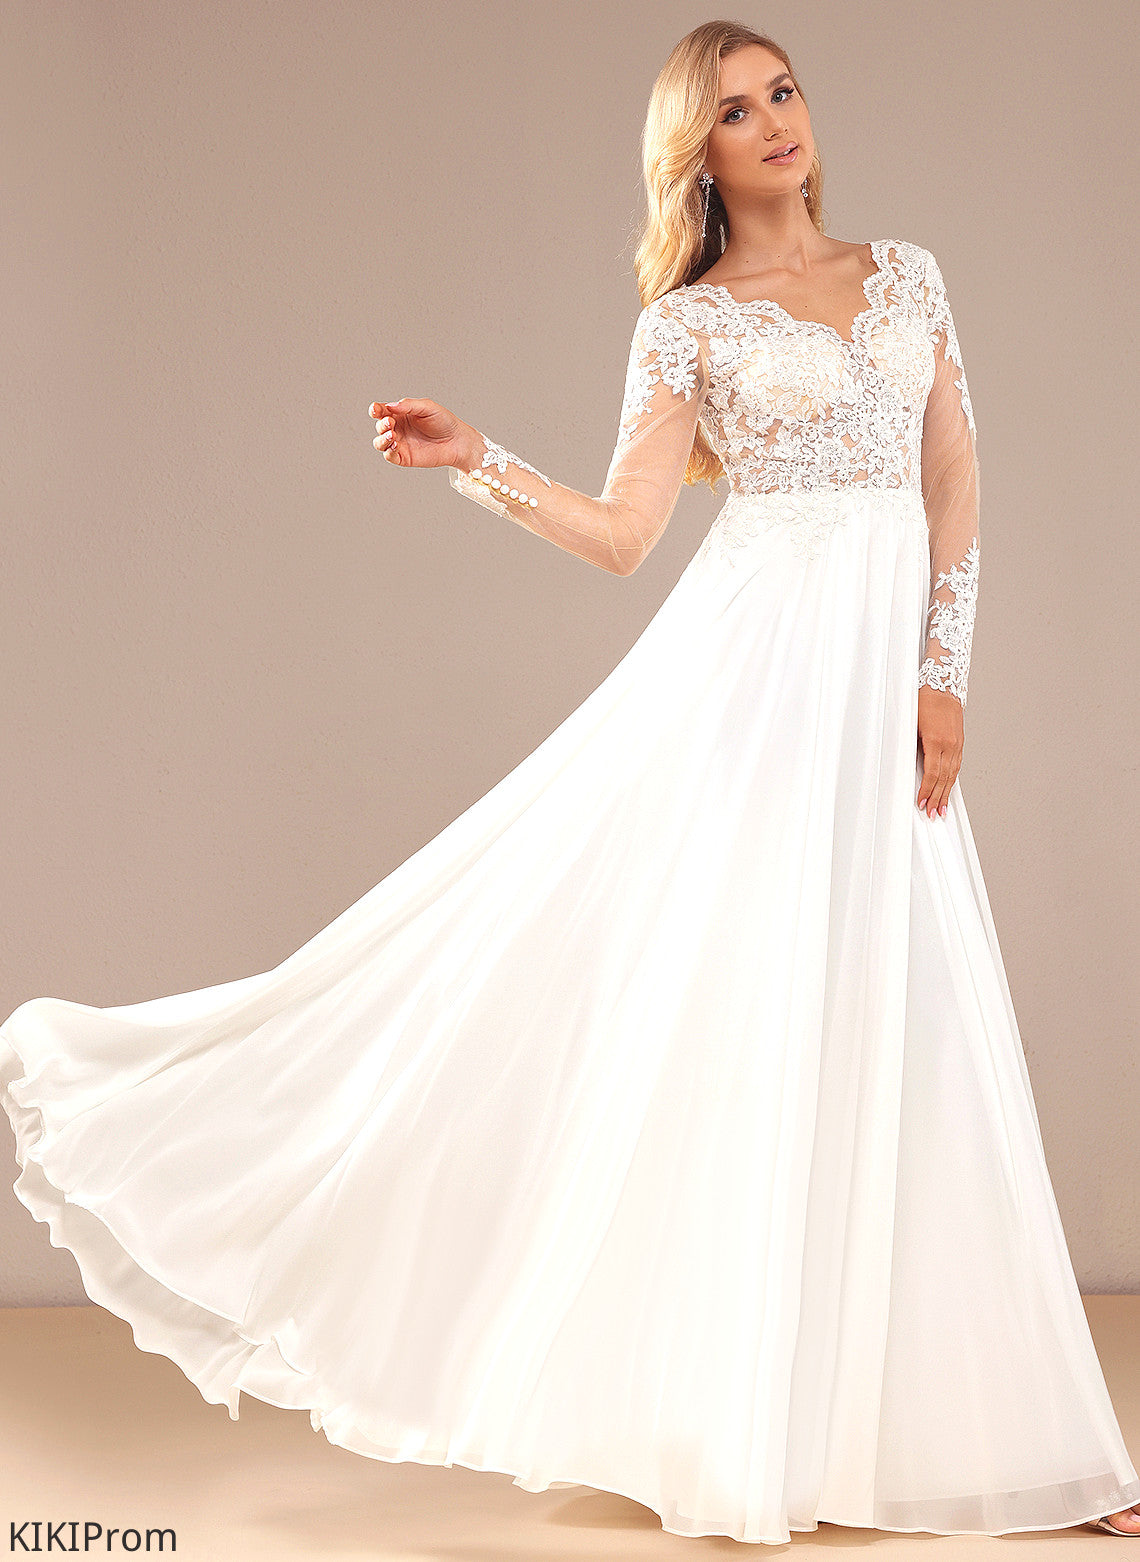 Dress With Sequins Wedding Floor-Length V-neck Wedding Dresses Lace Chiffon Marianna A-Line